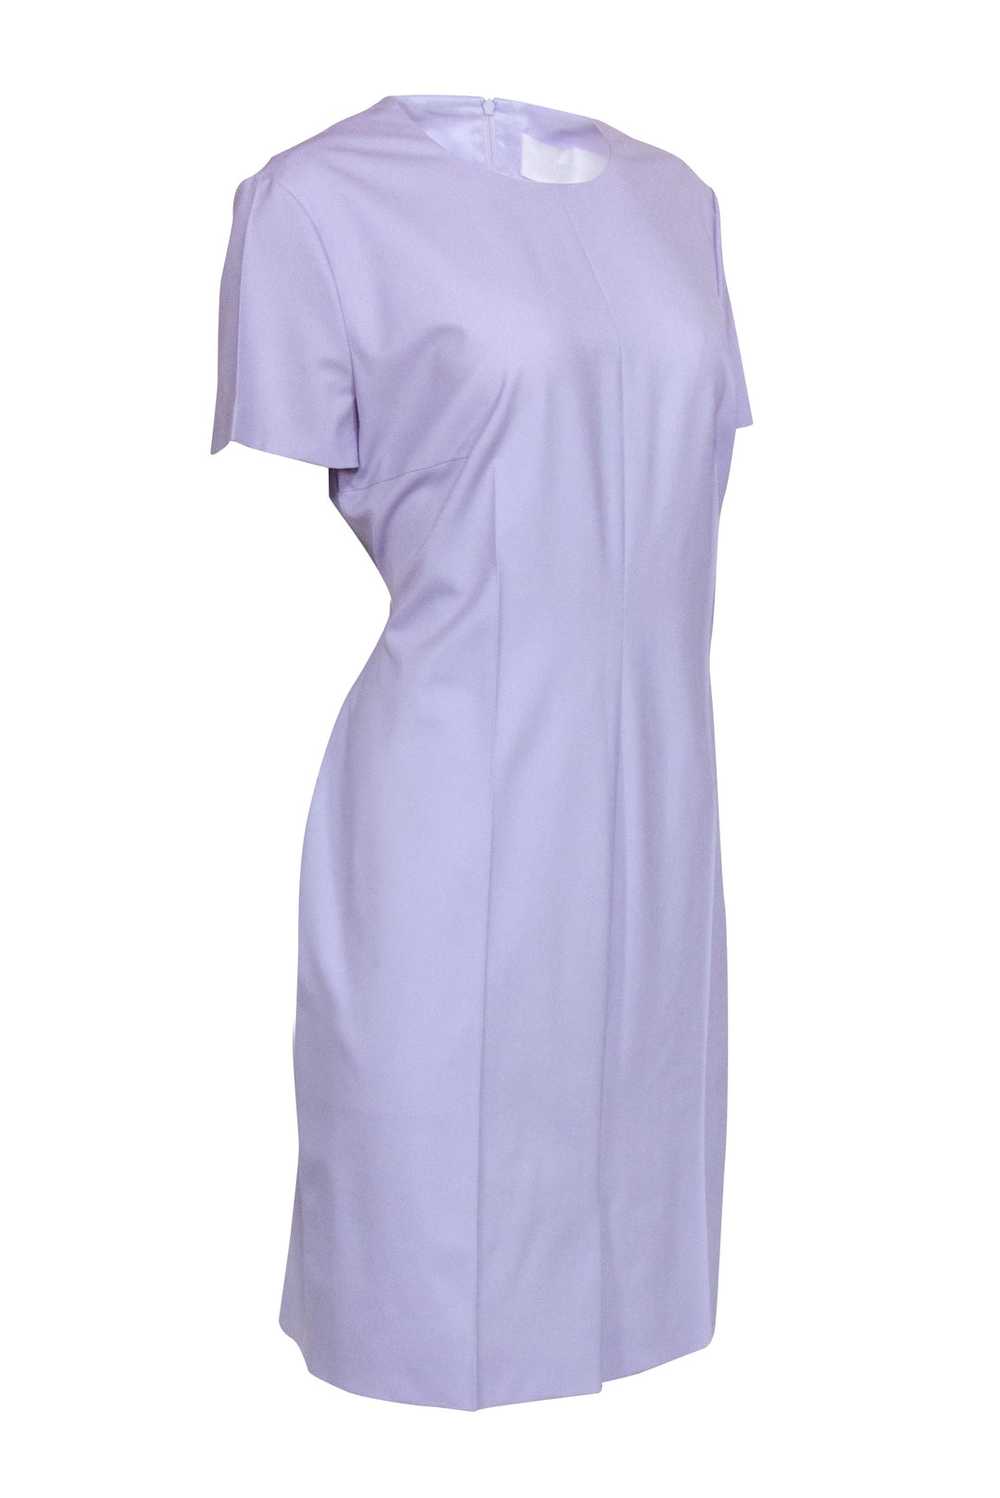 Hugo Boss - Lavender Short Sleeve Shift Dress Sz … - image 2